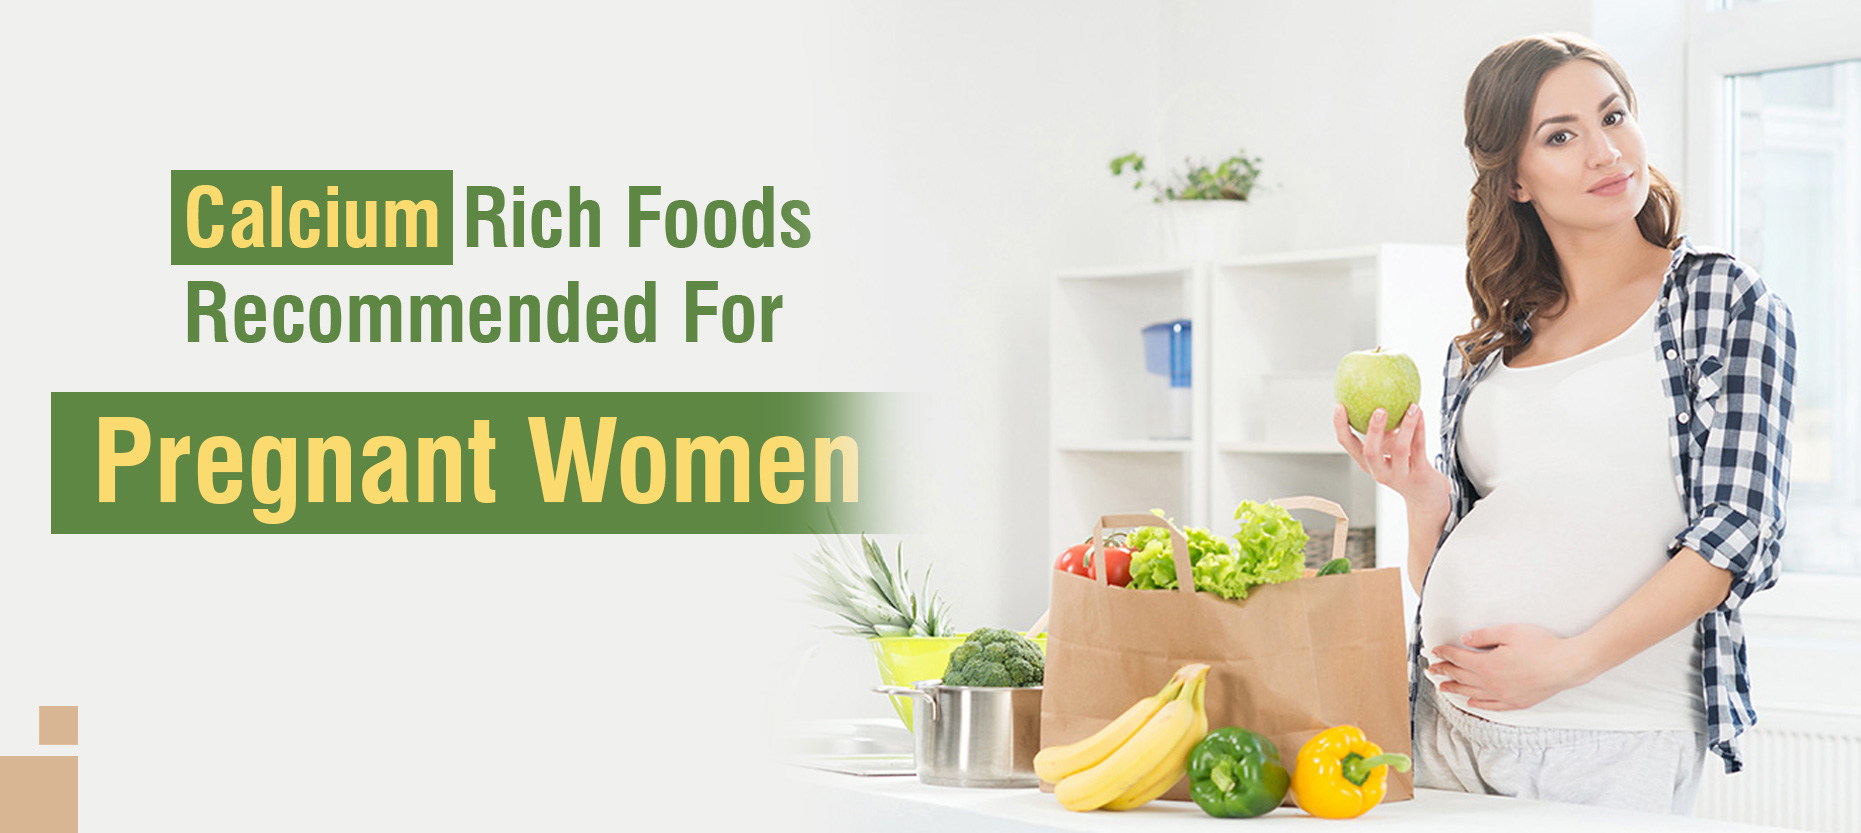 Calcium-Rich Foods for Pregnant Women